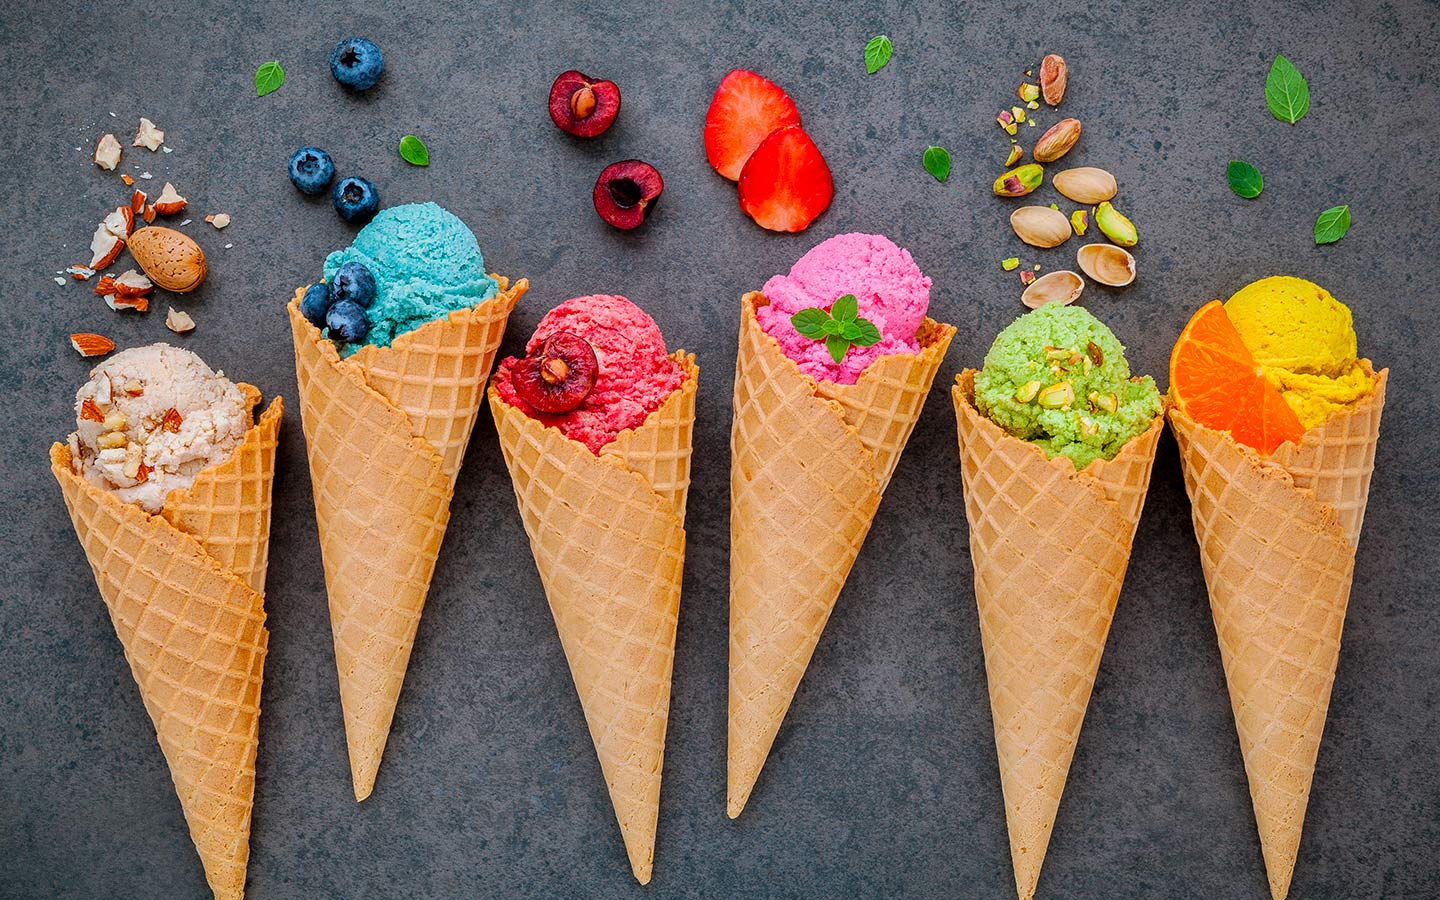 Evolution of artisanal ice-cream